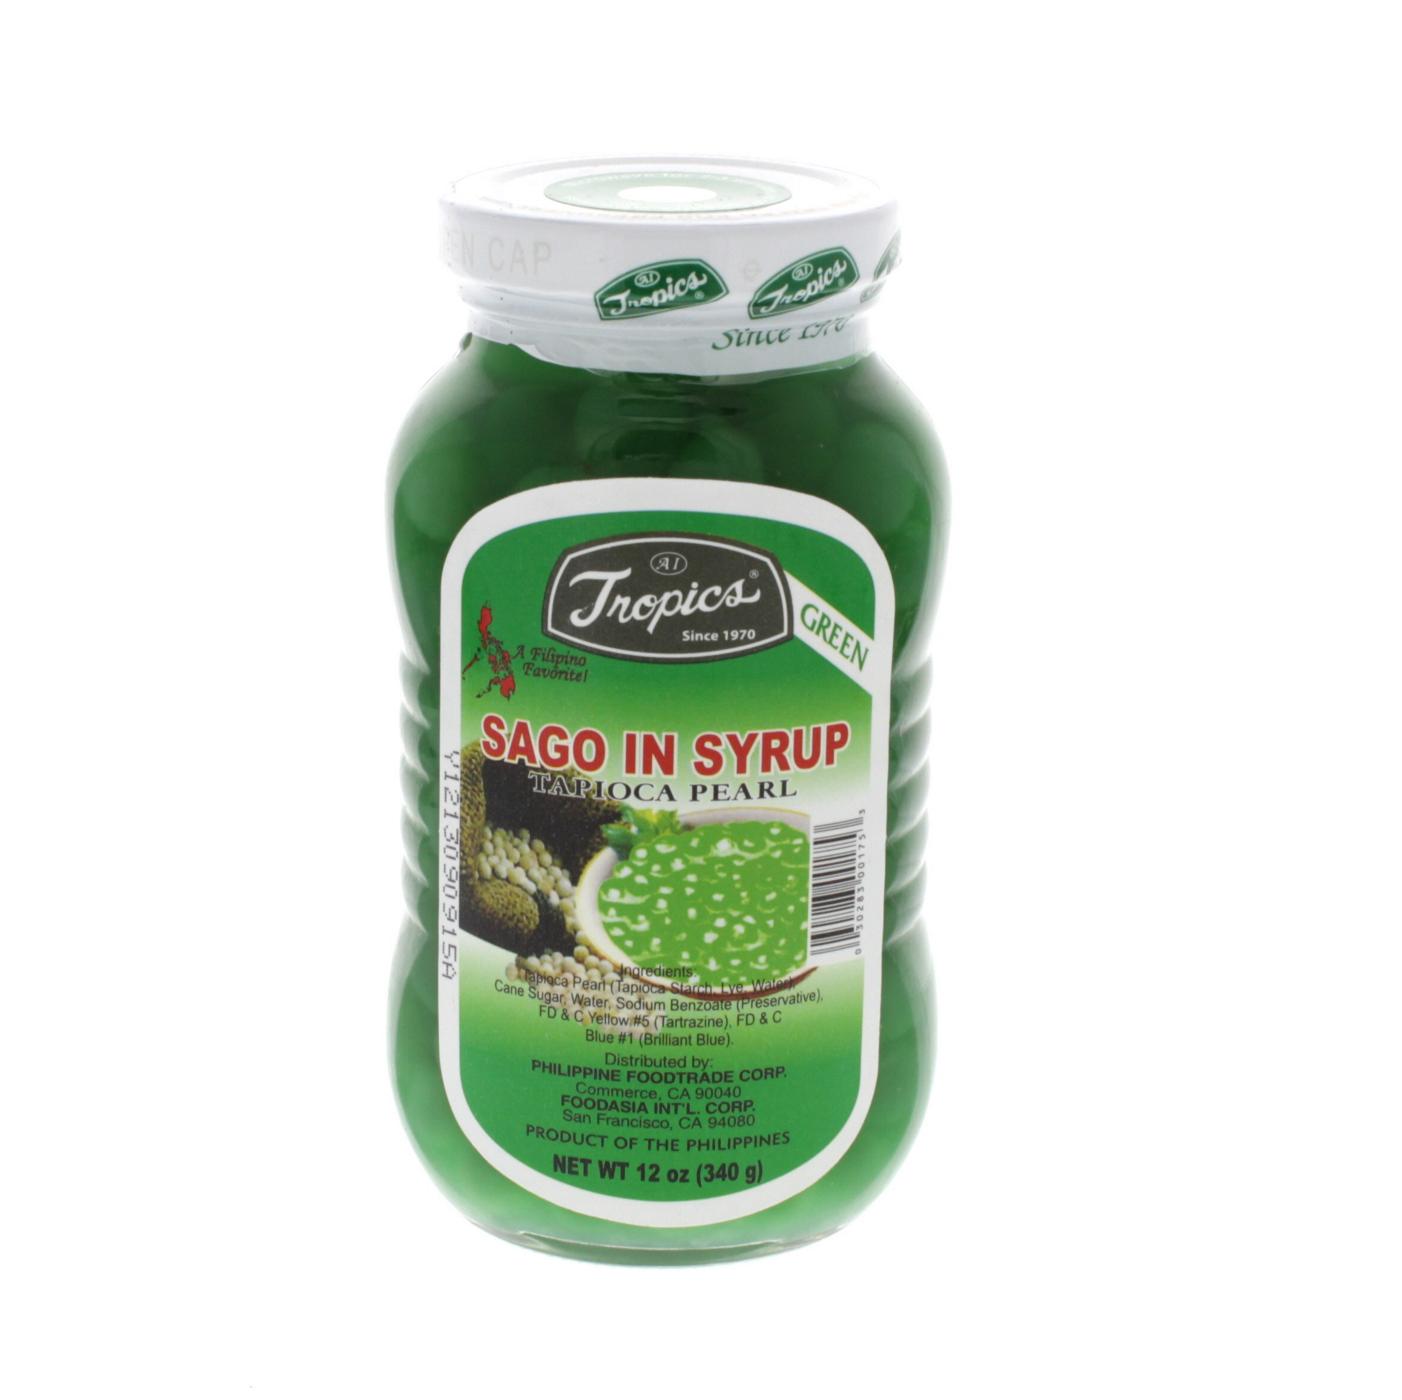 Tropics Sago In Syrup Green Tapioca Pearl; image 1 of 2